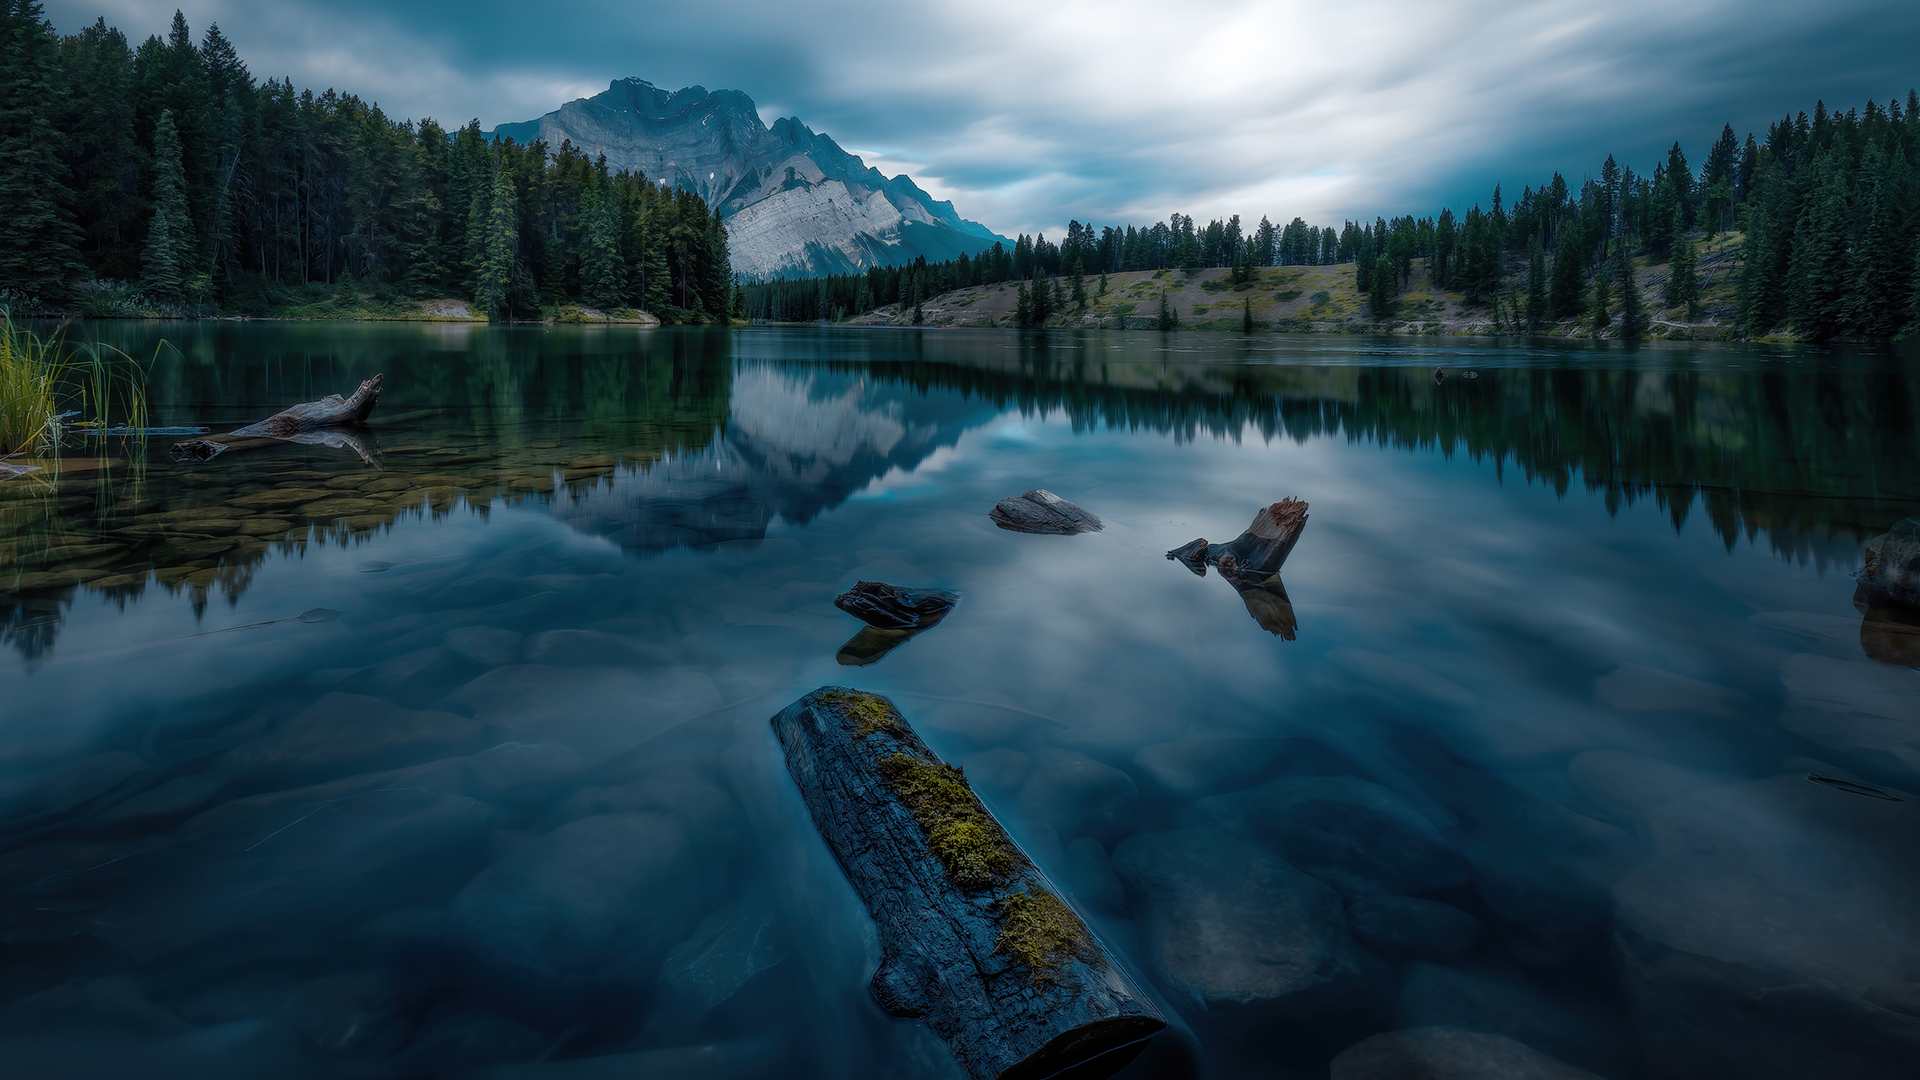 Lake Moraine Banff National Park Emerald Water Landscape Alberta Canada  Stock Photo - Download Image Now - iStock